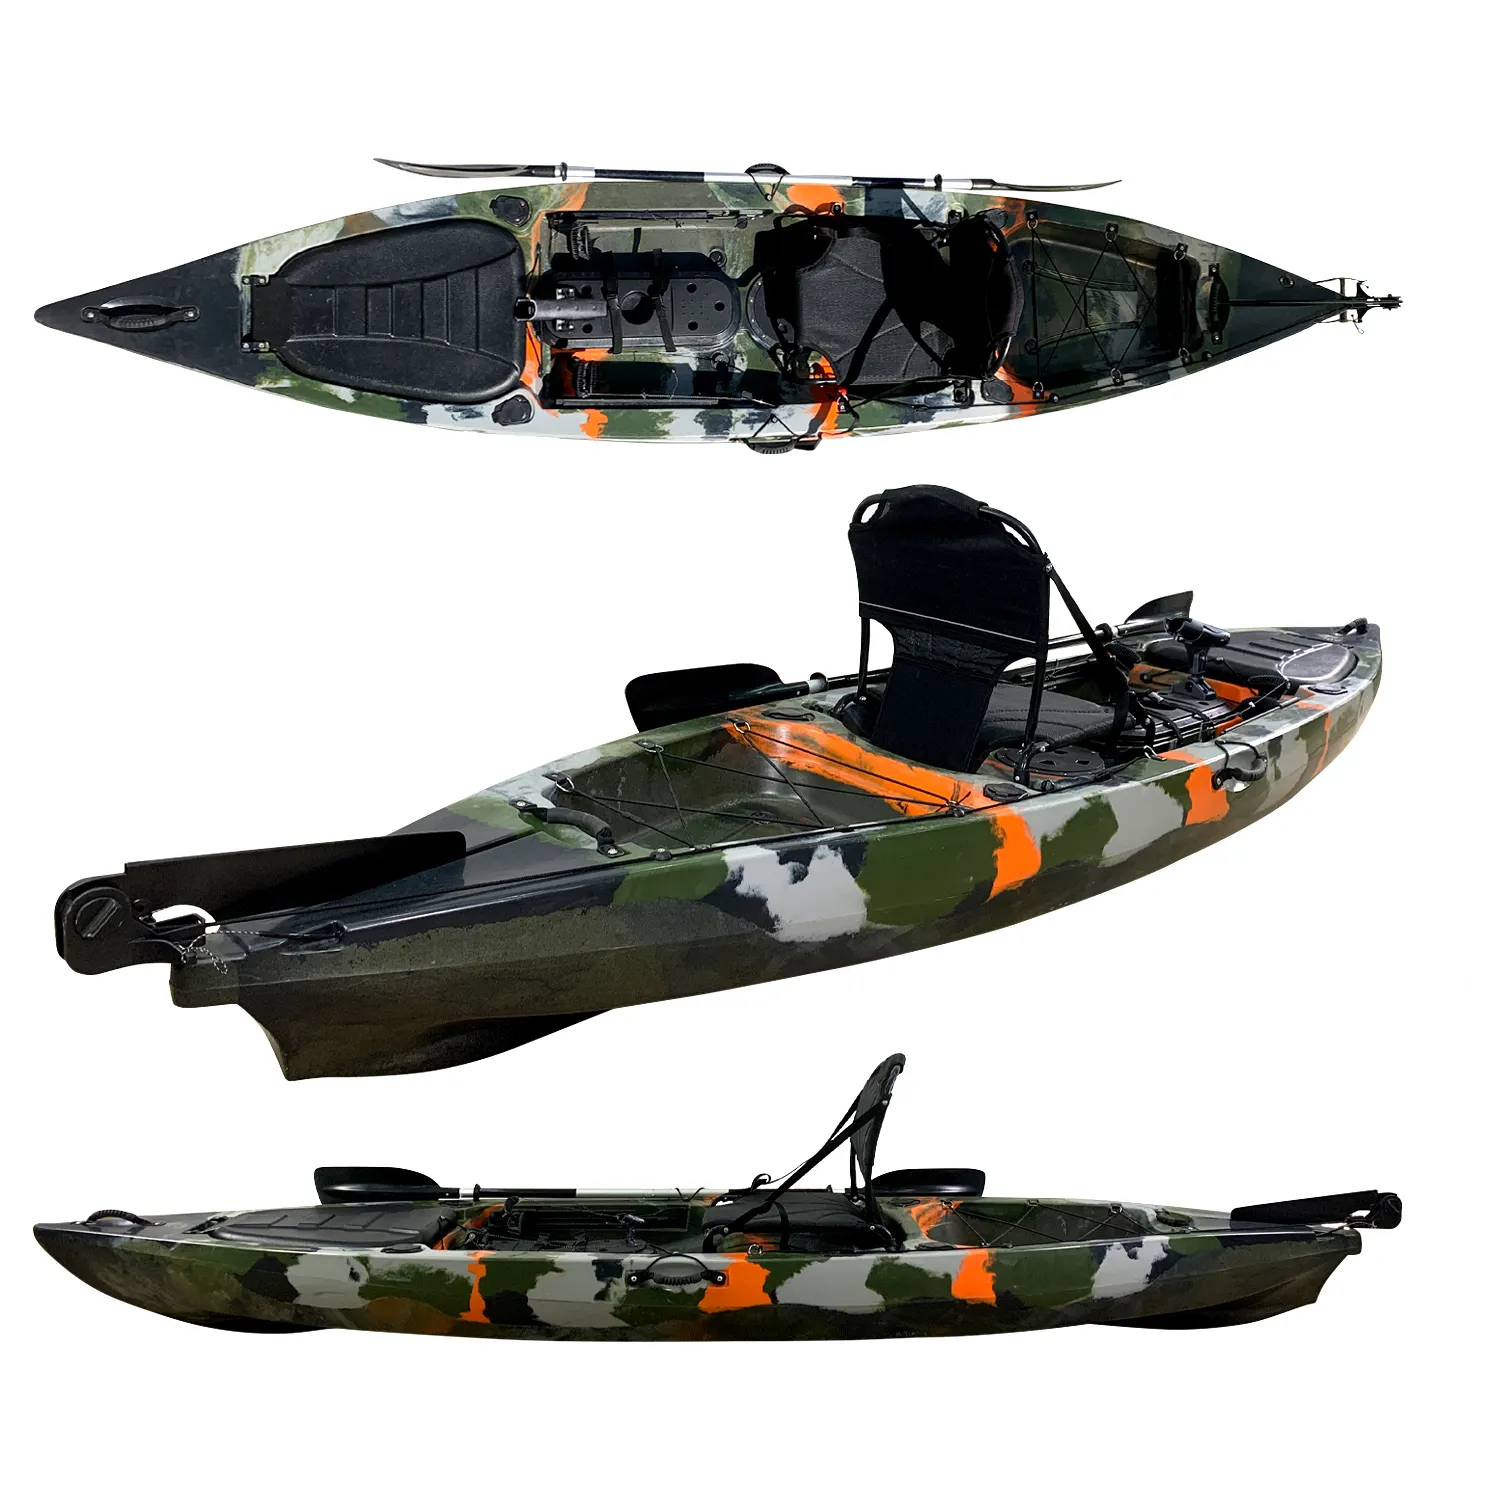 TOLEE canoe kayak boat fishing ocean 1 person plastic boat with paddle fishing kayak pedal drive kayak sit on top